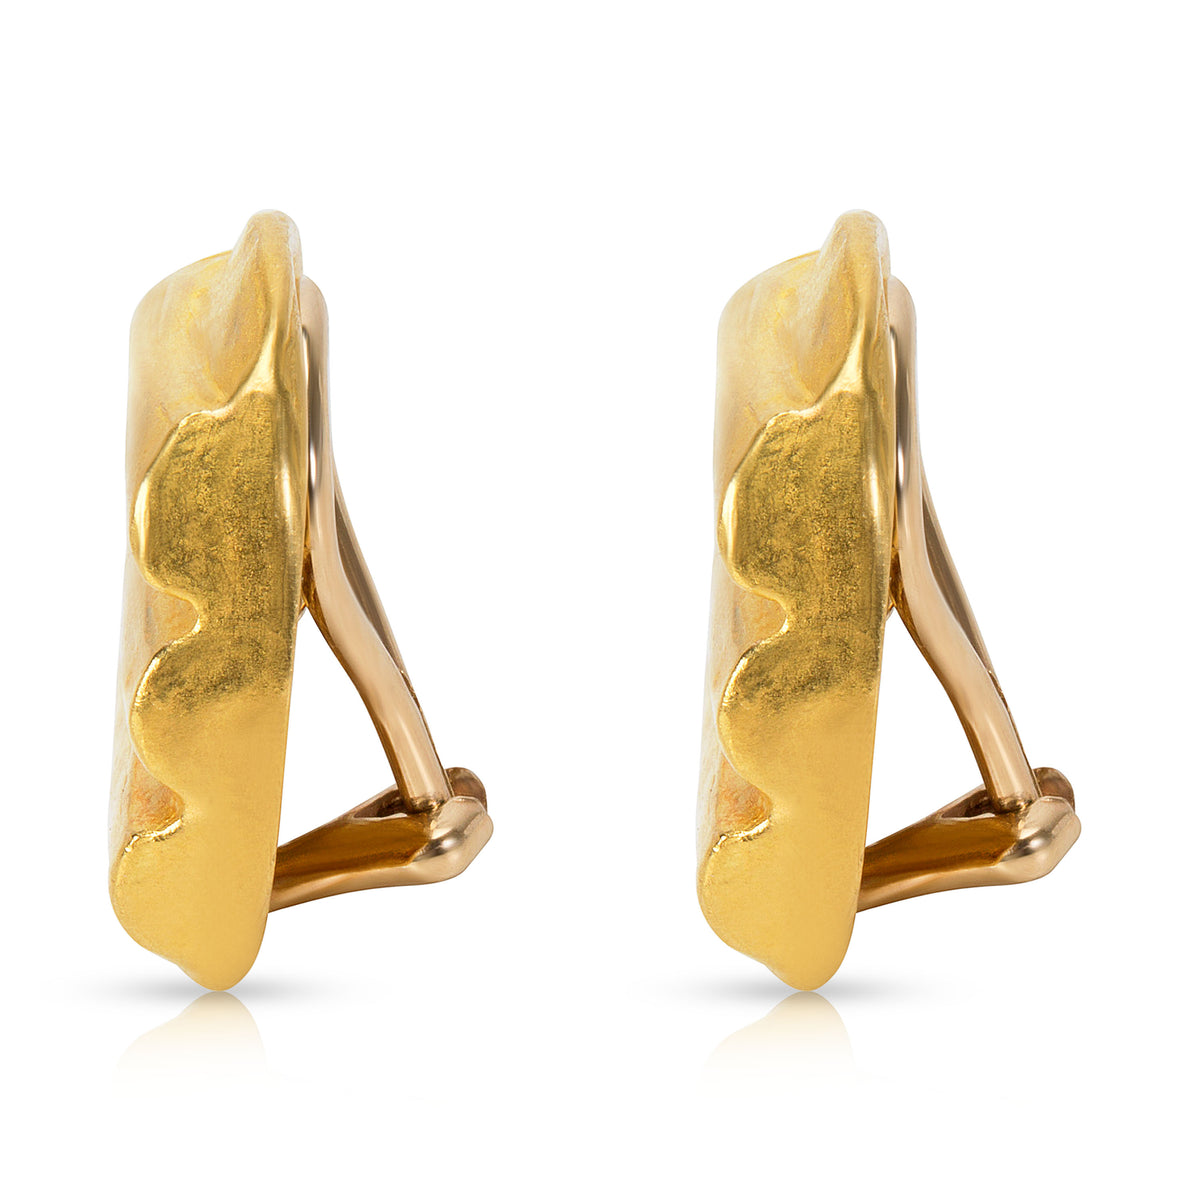 Denise Roberge Earrings in 22K Yellow Gold